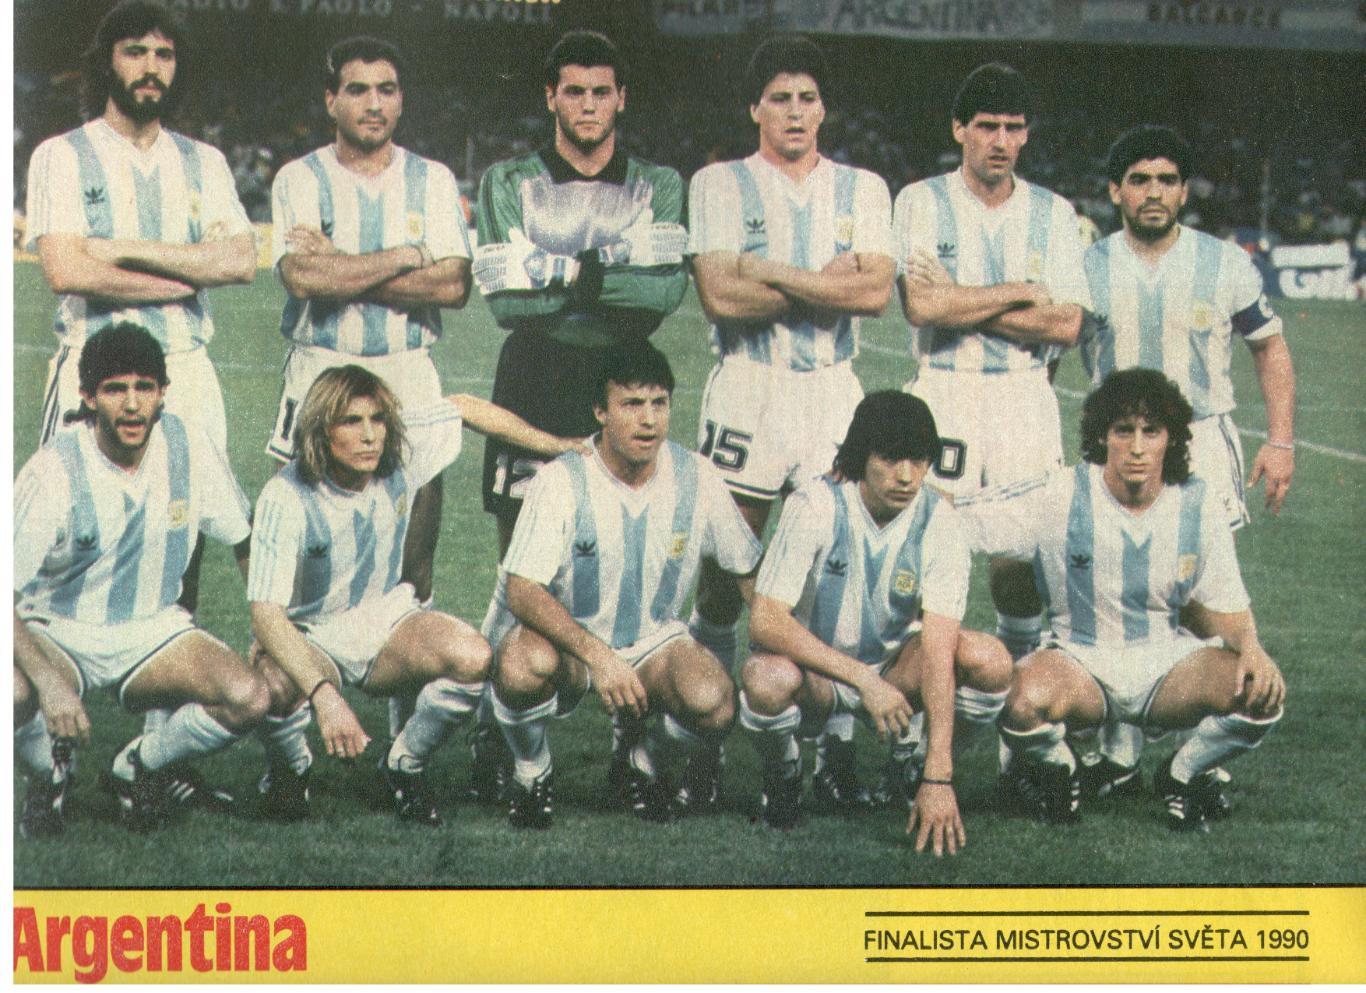 Участники чемпионата мира 1990. Аргентина - финалист